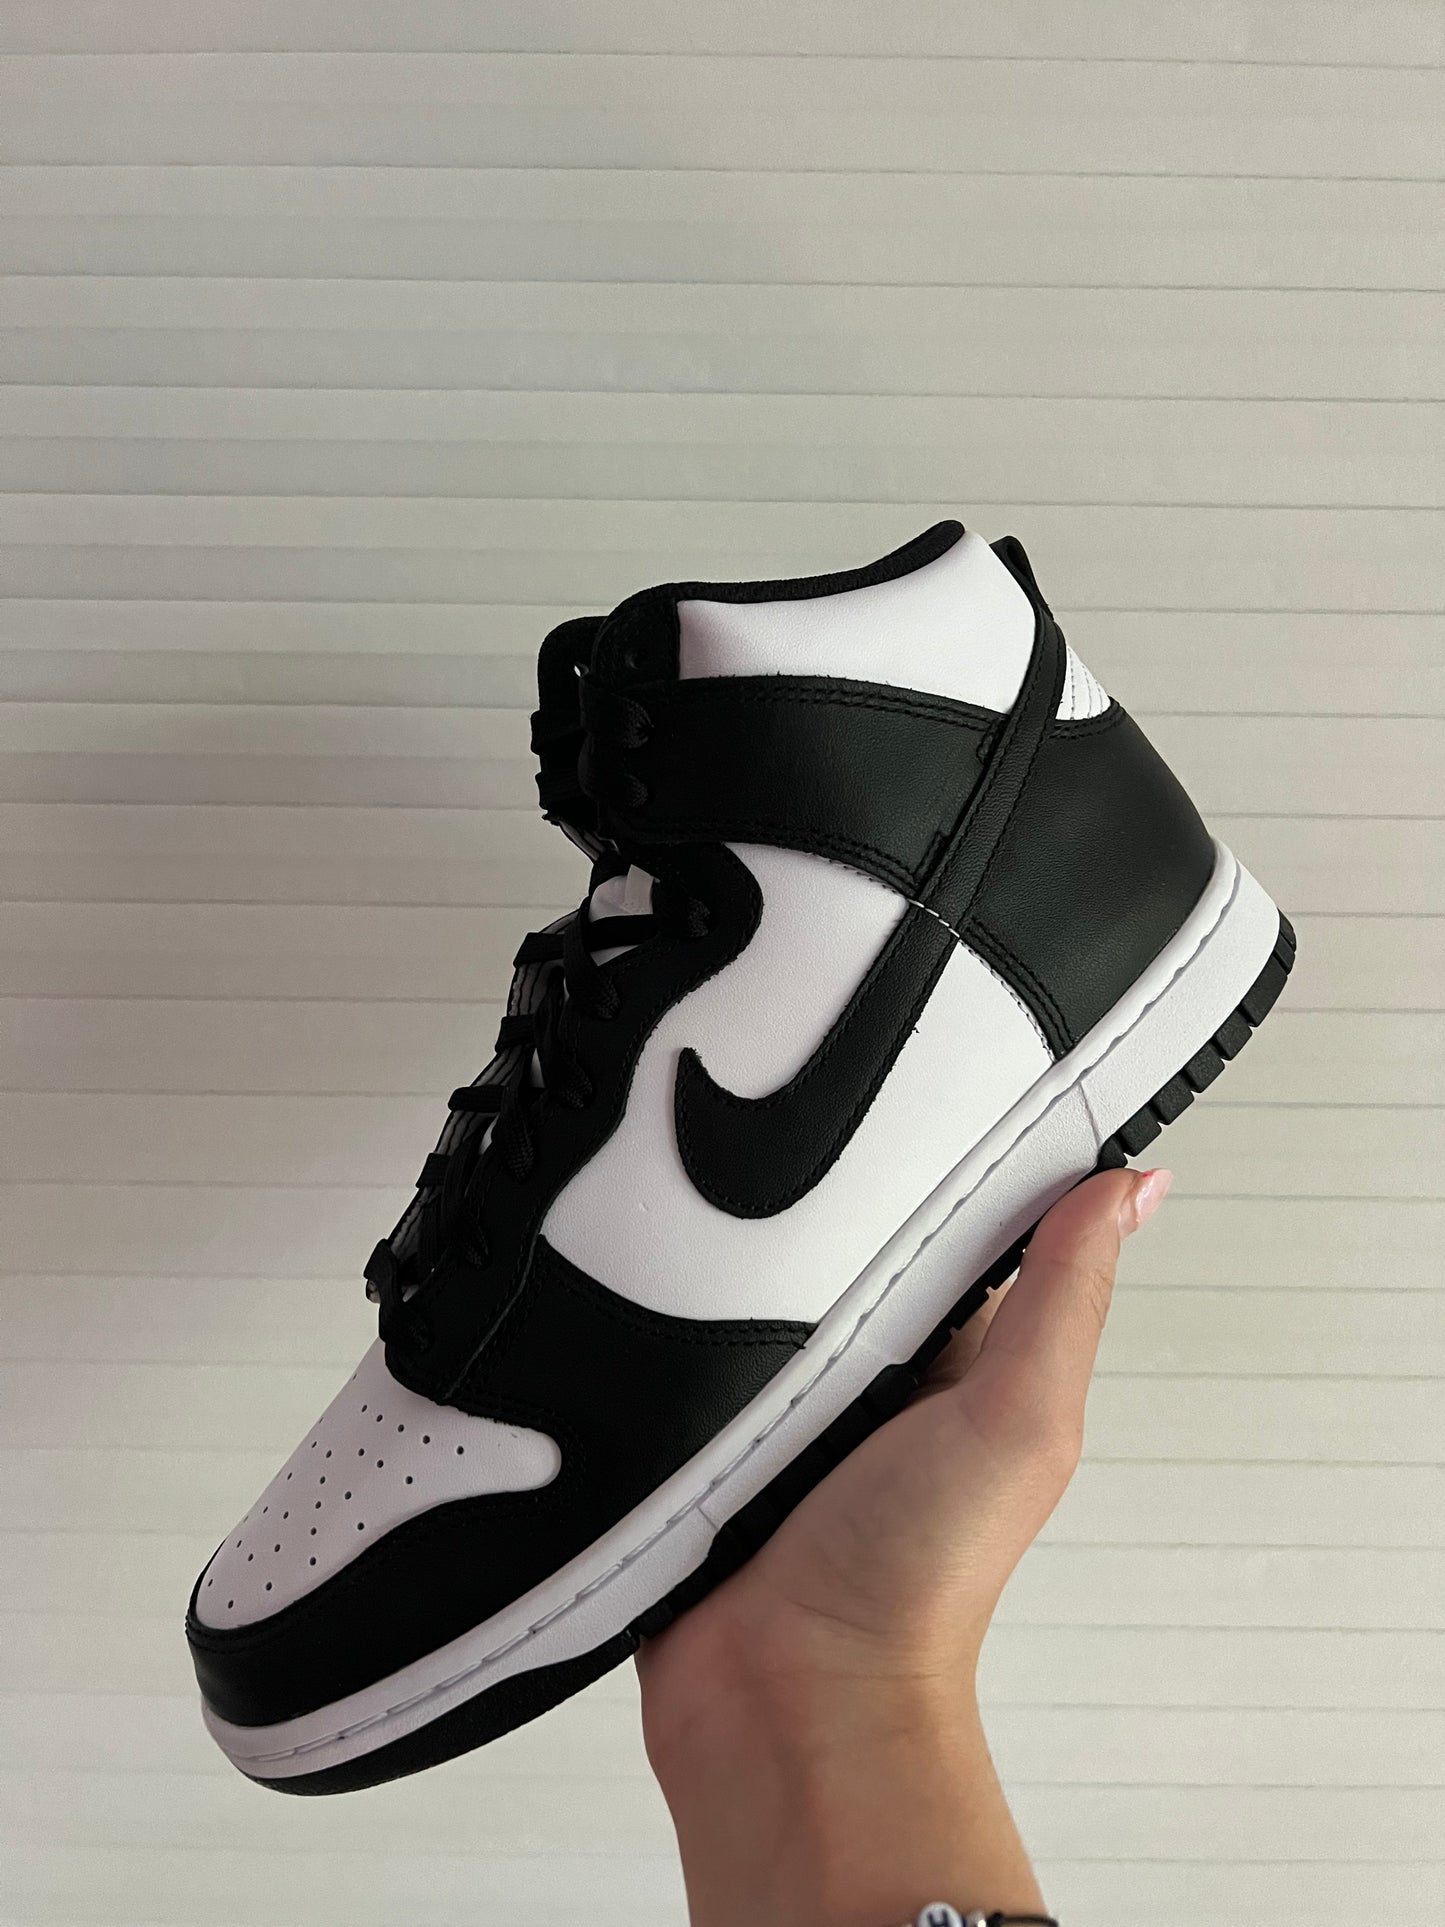 Nike Dunk High Panda Black White